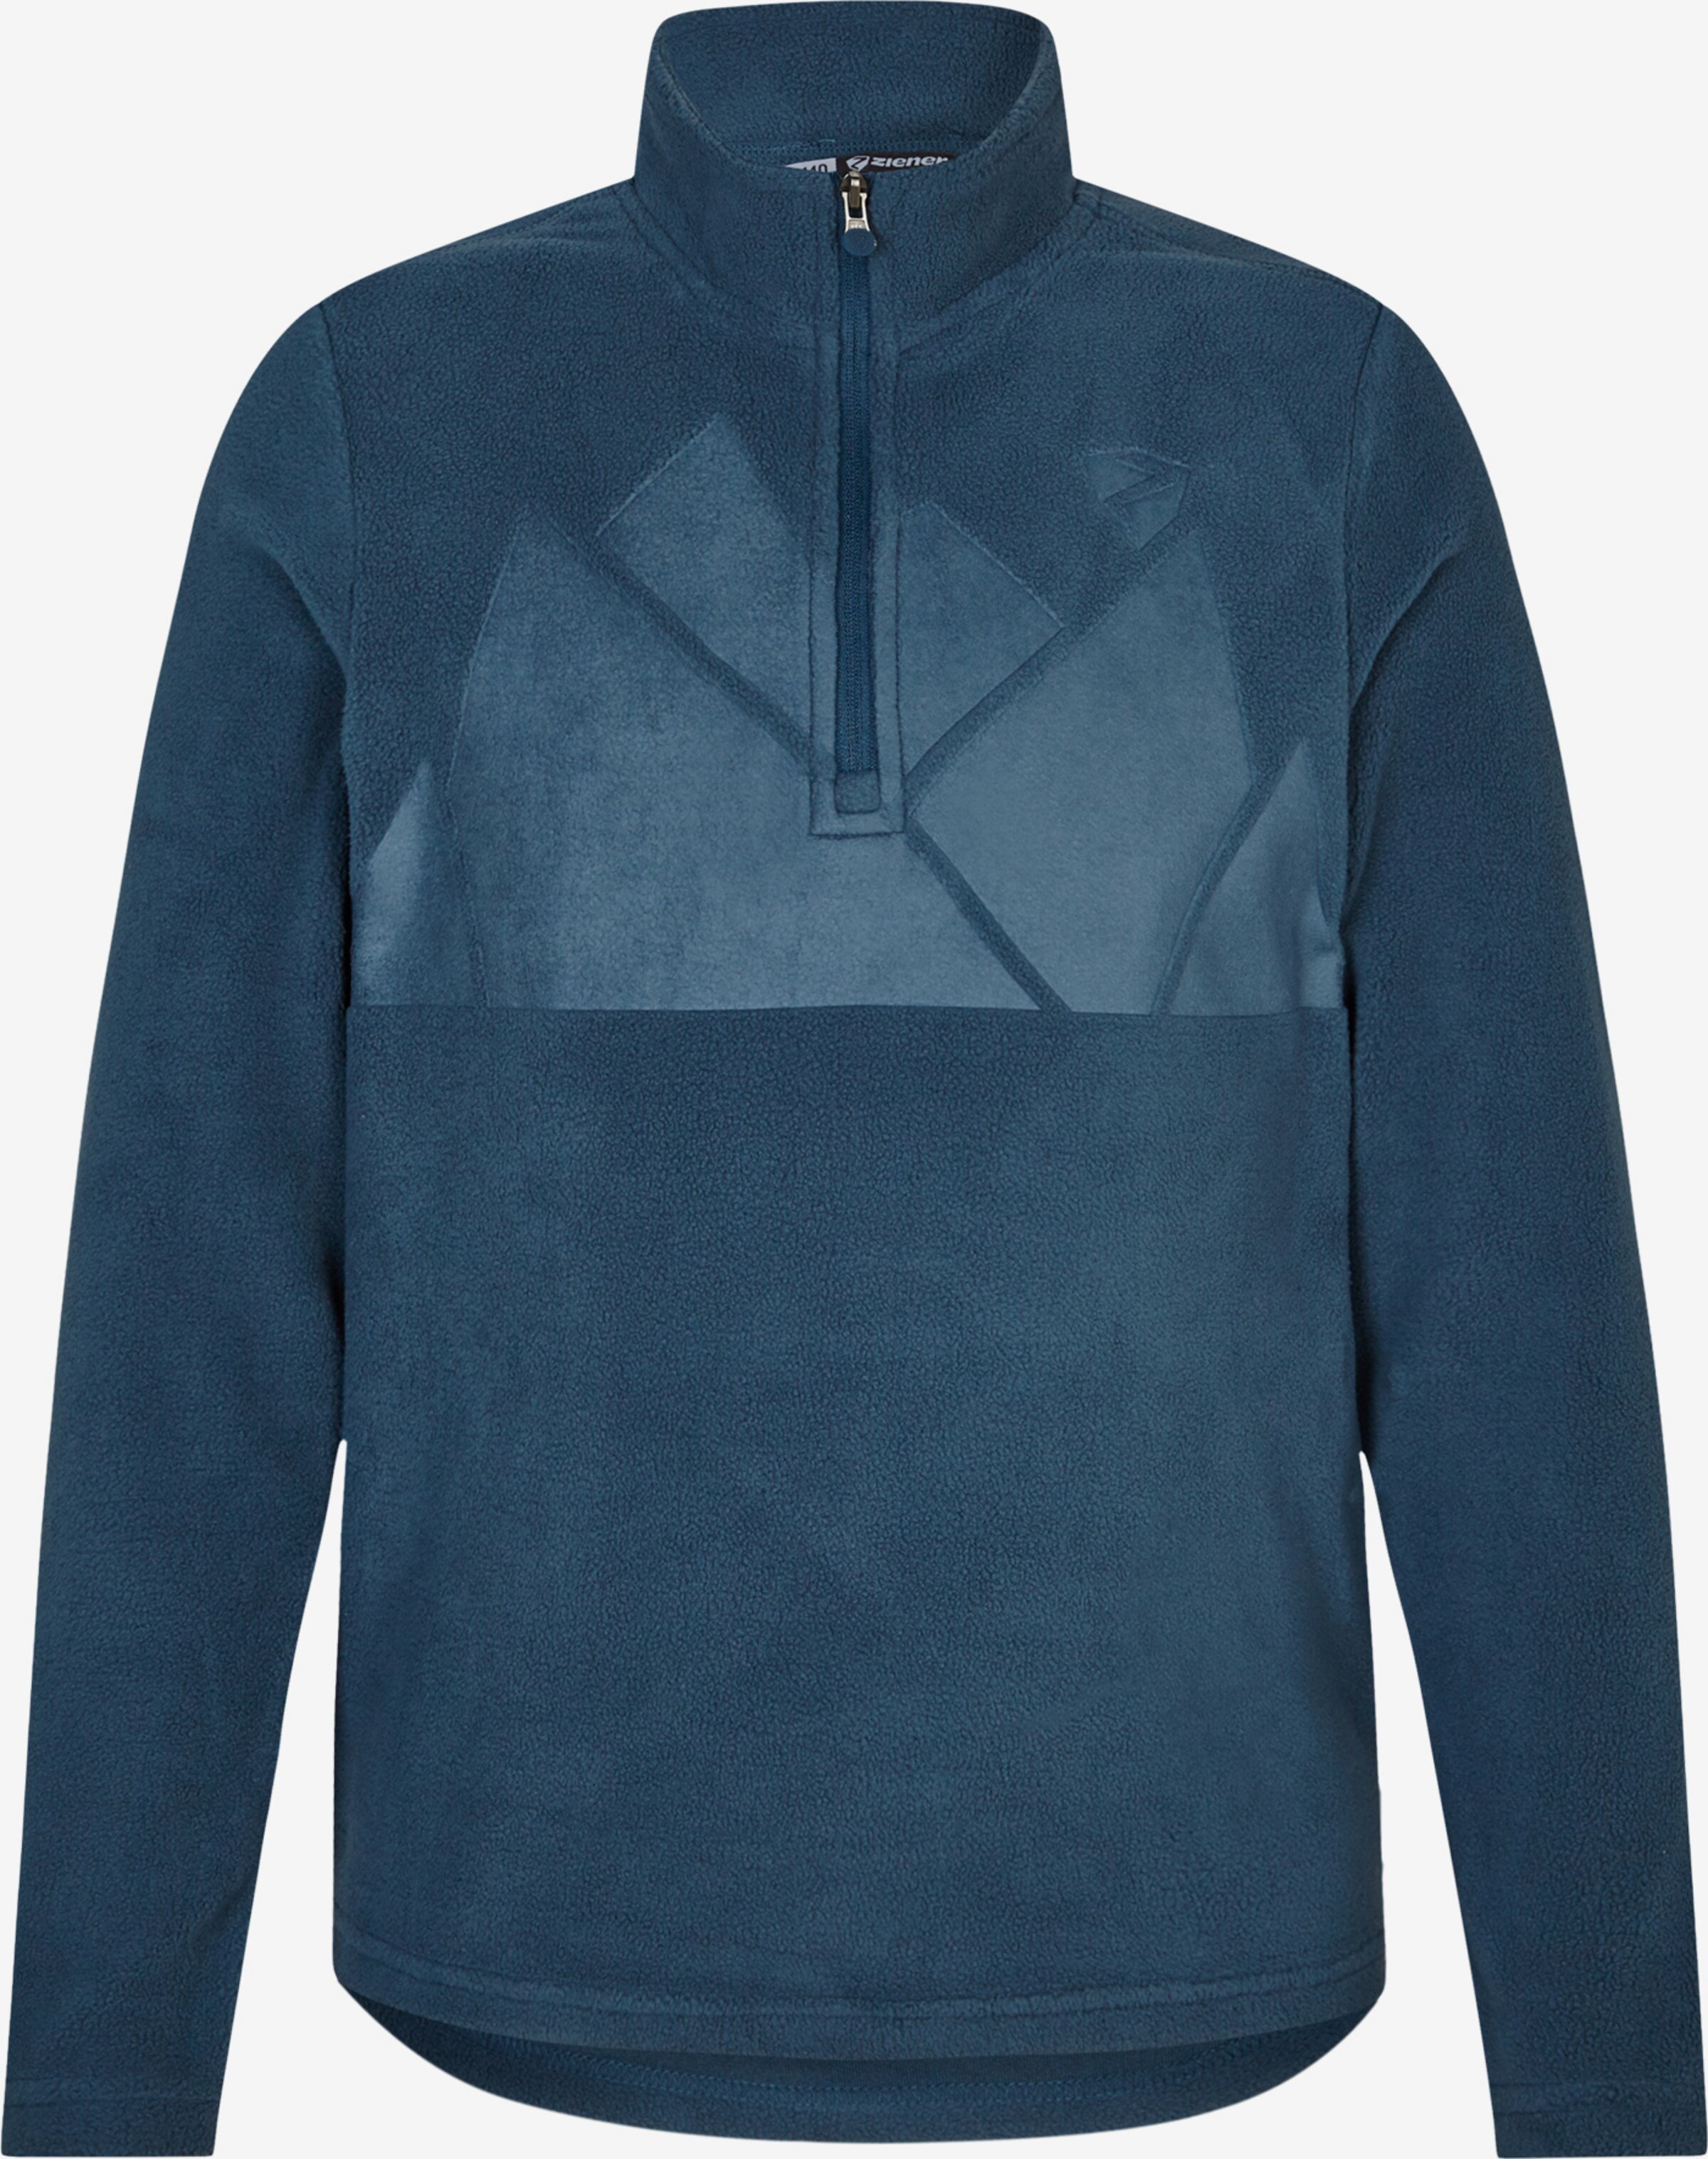 \'Jonki\' Athletic Dark ABOUT | YOU Blue in ZIENER Sweater